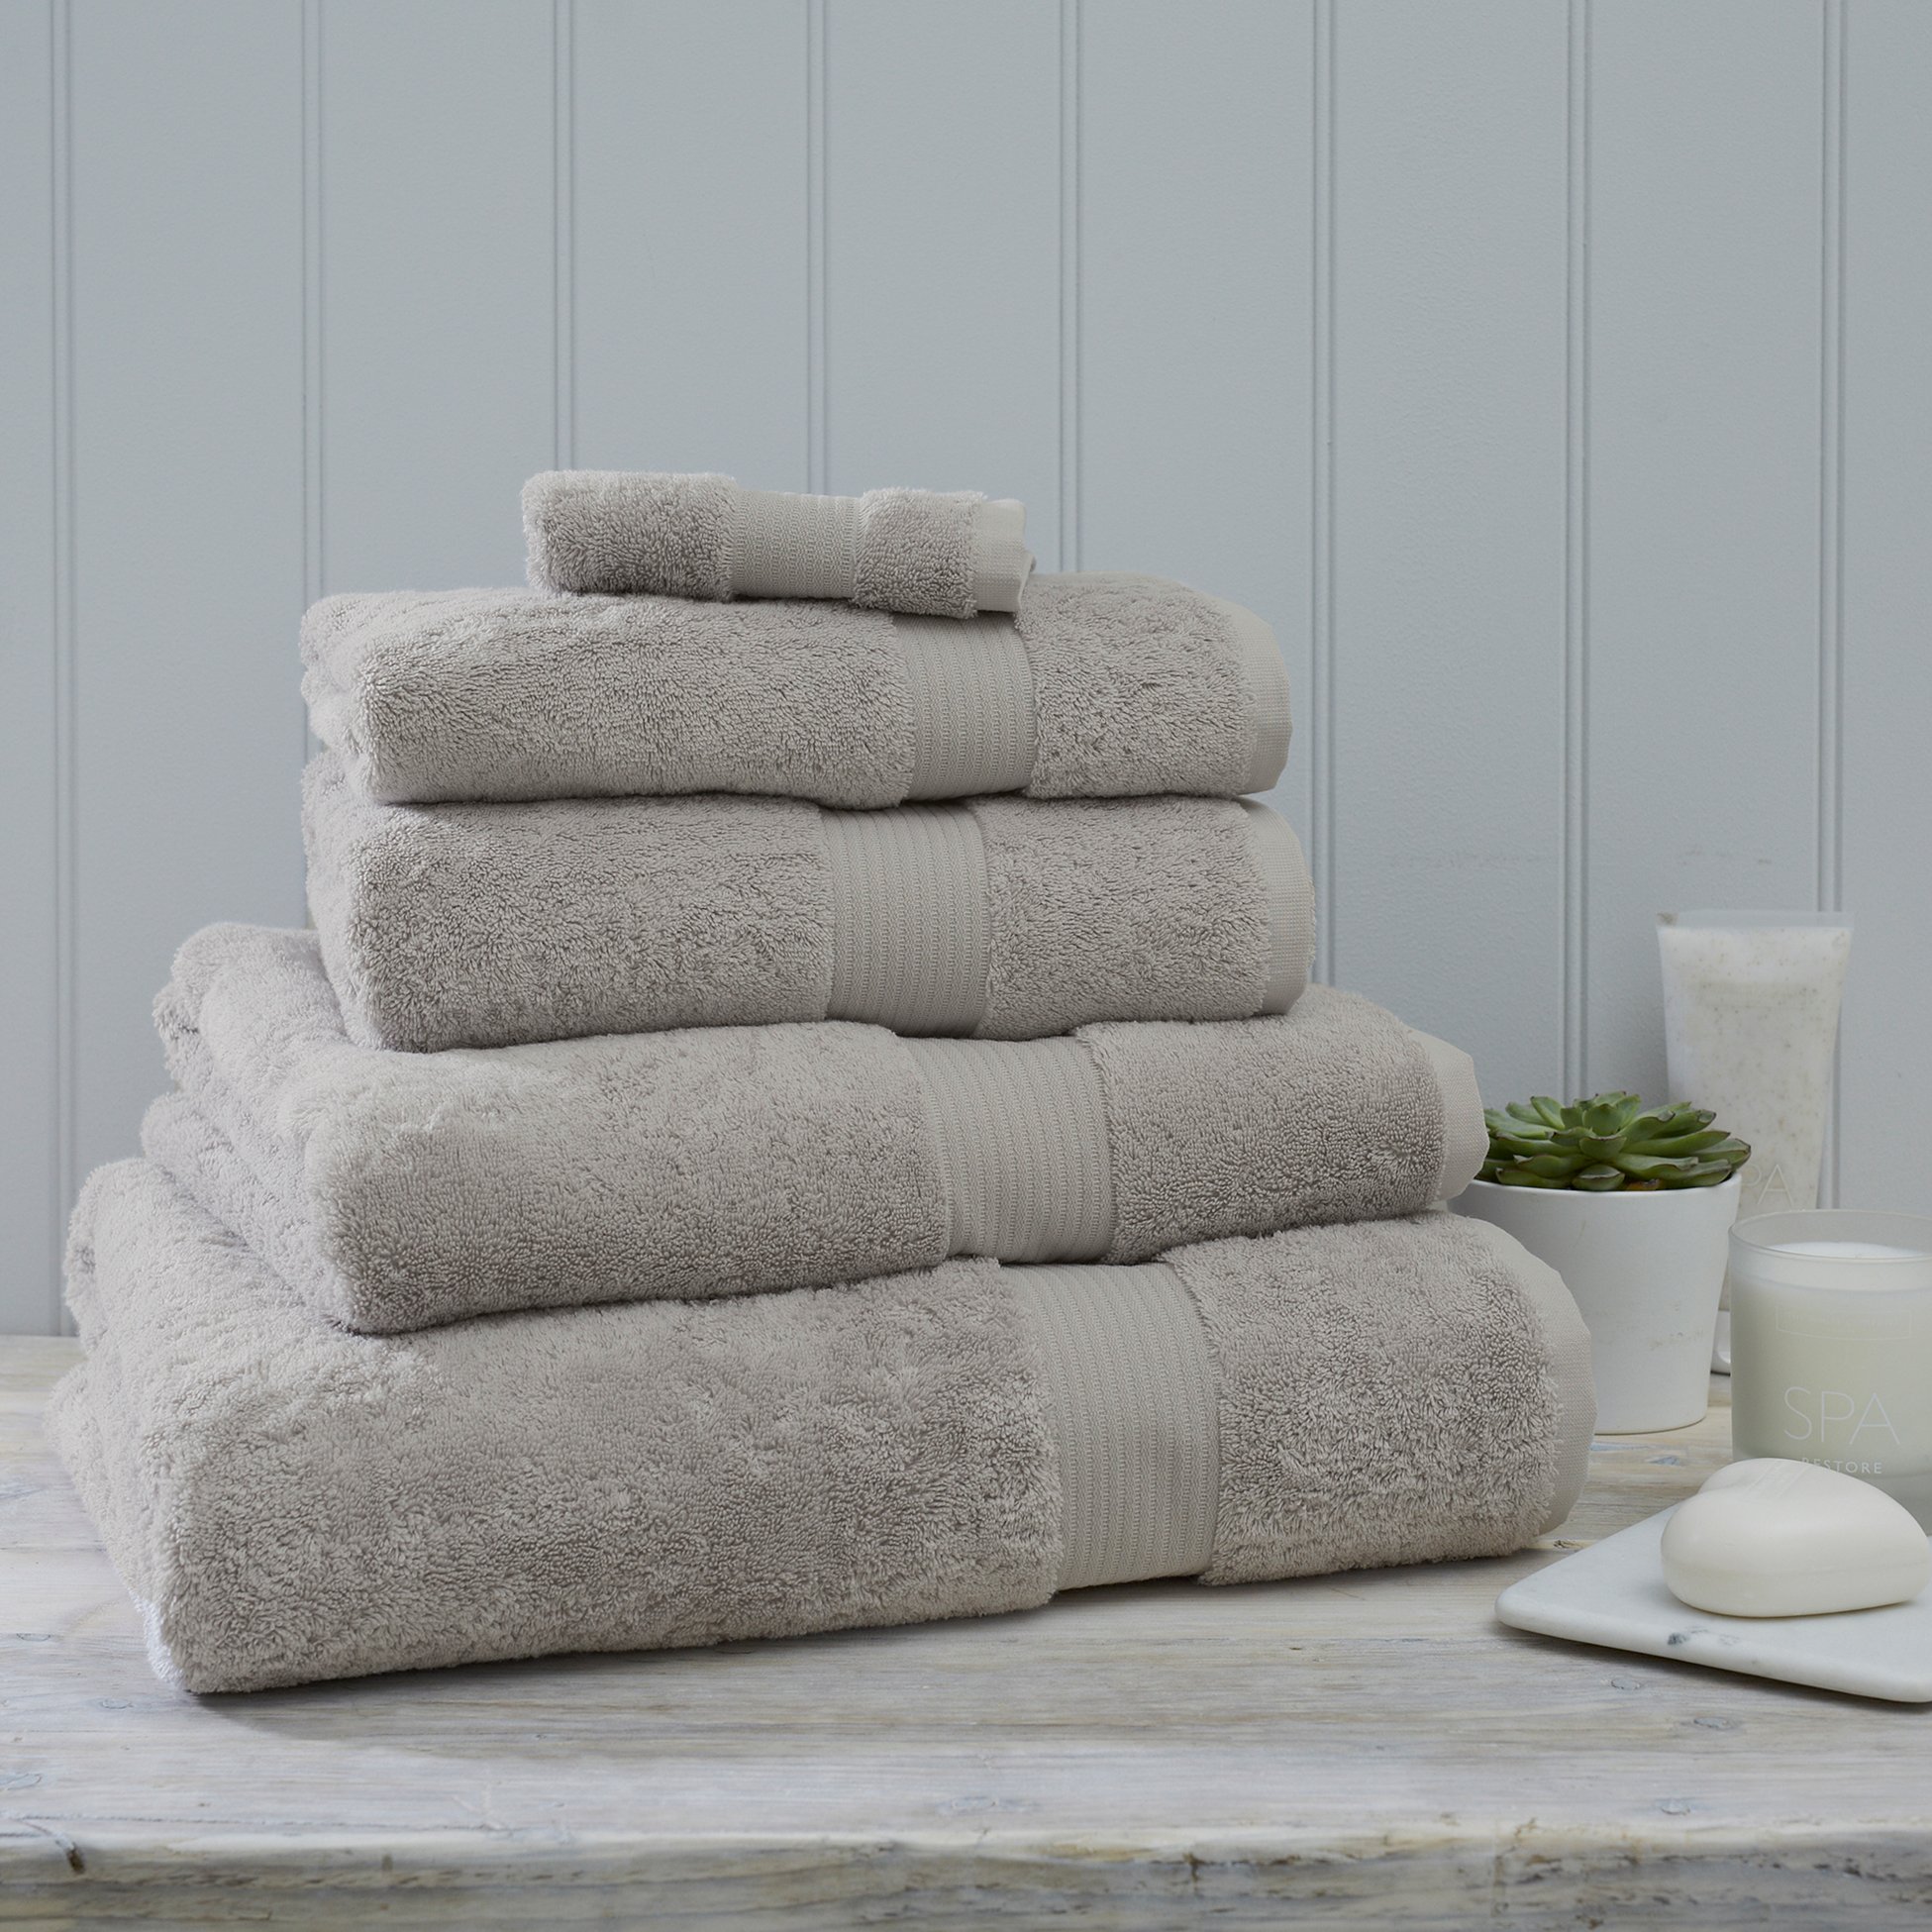 White, Bath Towels Set of 4 Premium Quality for Daily Bathroom Use 100% Cotton Towel Ephesos Ephes Collection Bath Towels Set 